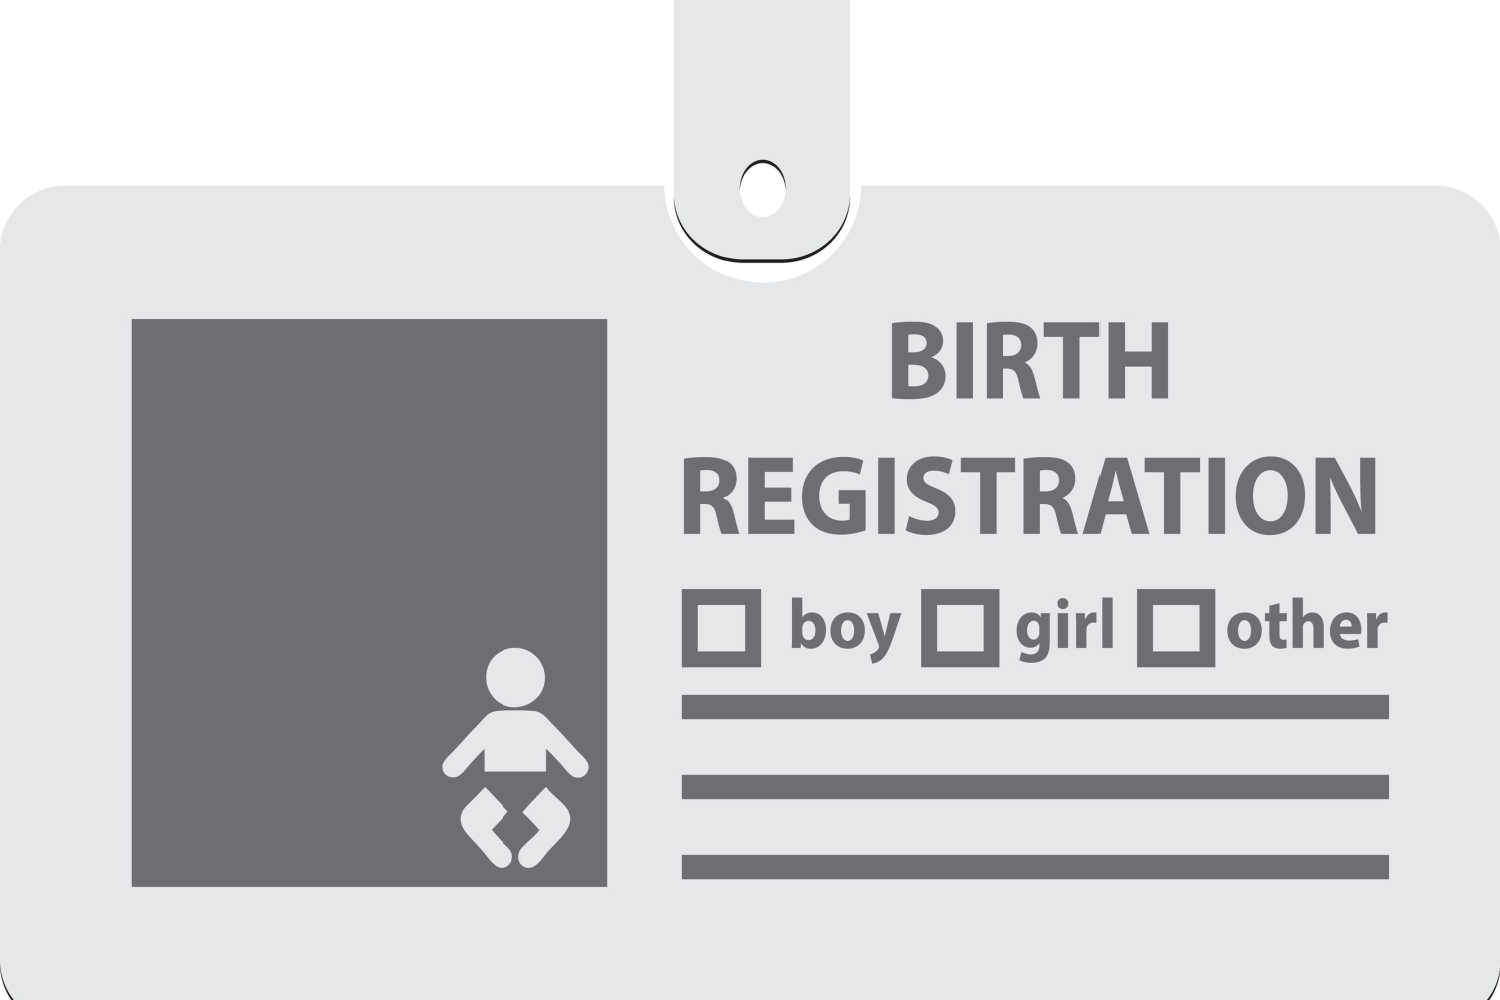 Birth registration in India